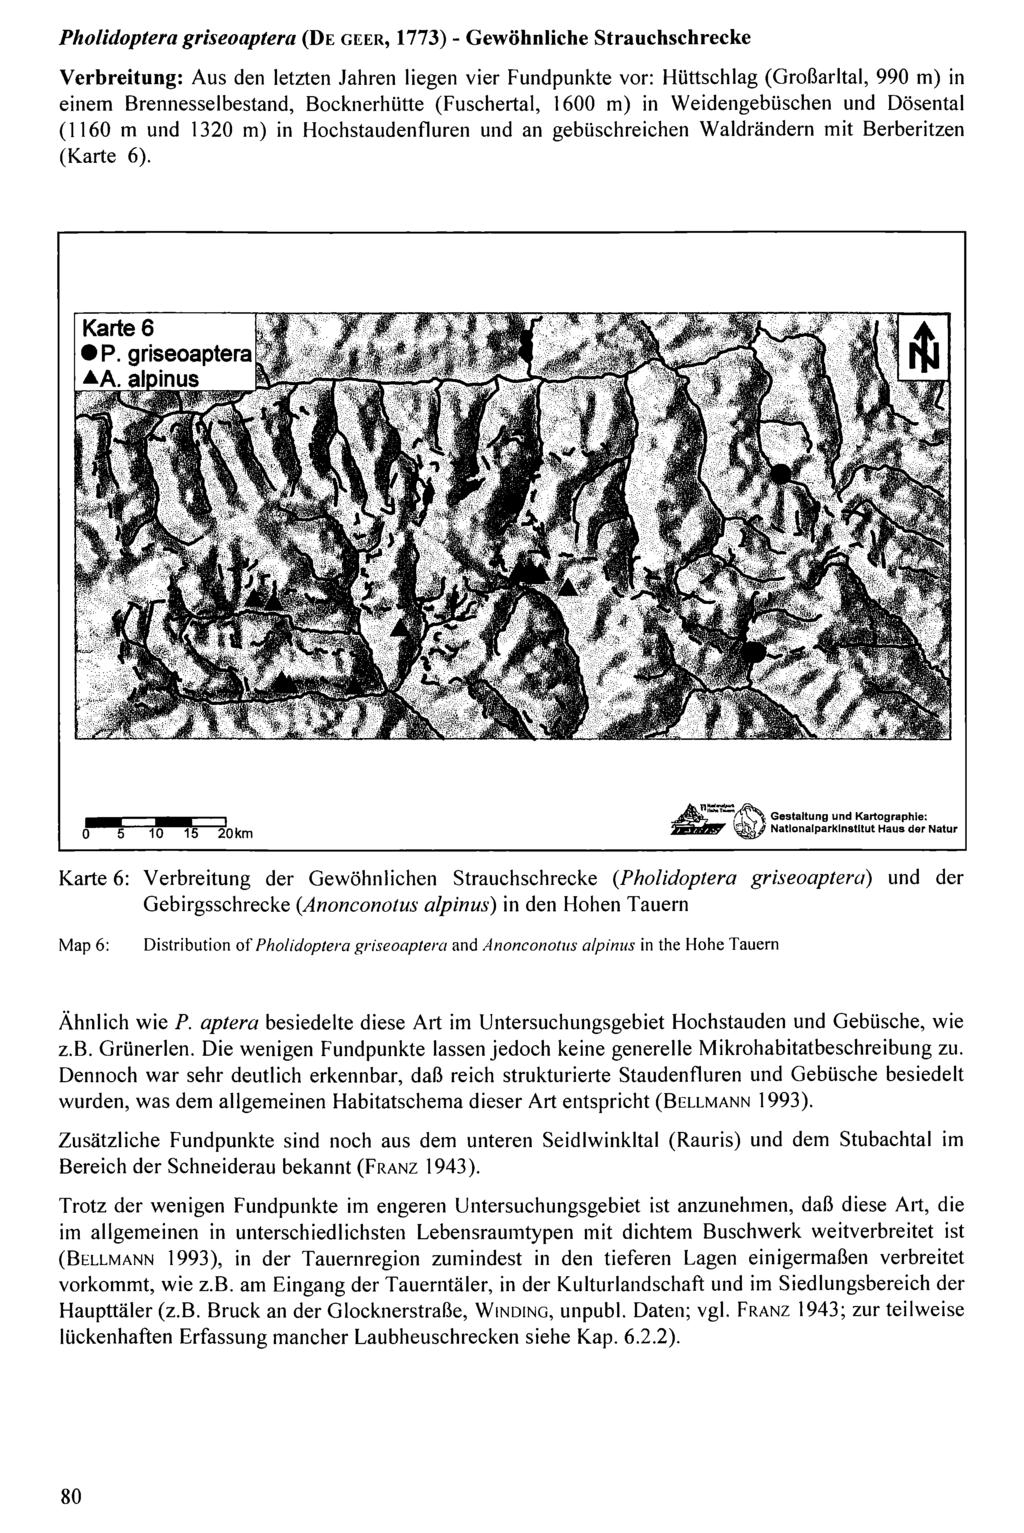 Pholidoptera griseoaptera (D e g Nationalpark e e r, 1773) Hohe Tauern, - Gewöhnliche download unter www.biologiezentrum.